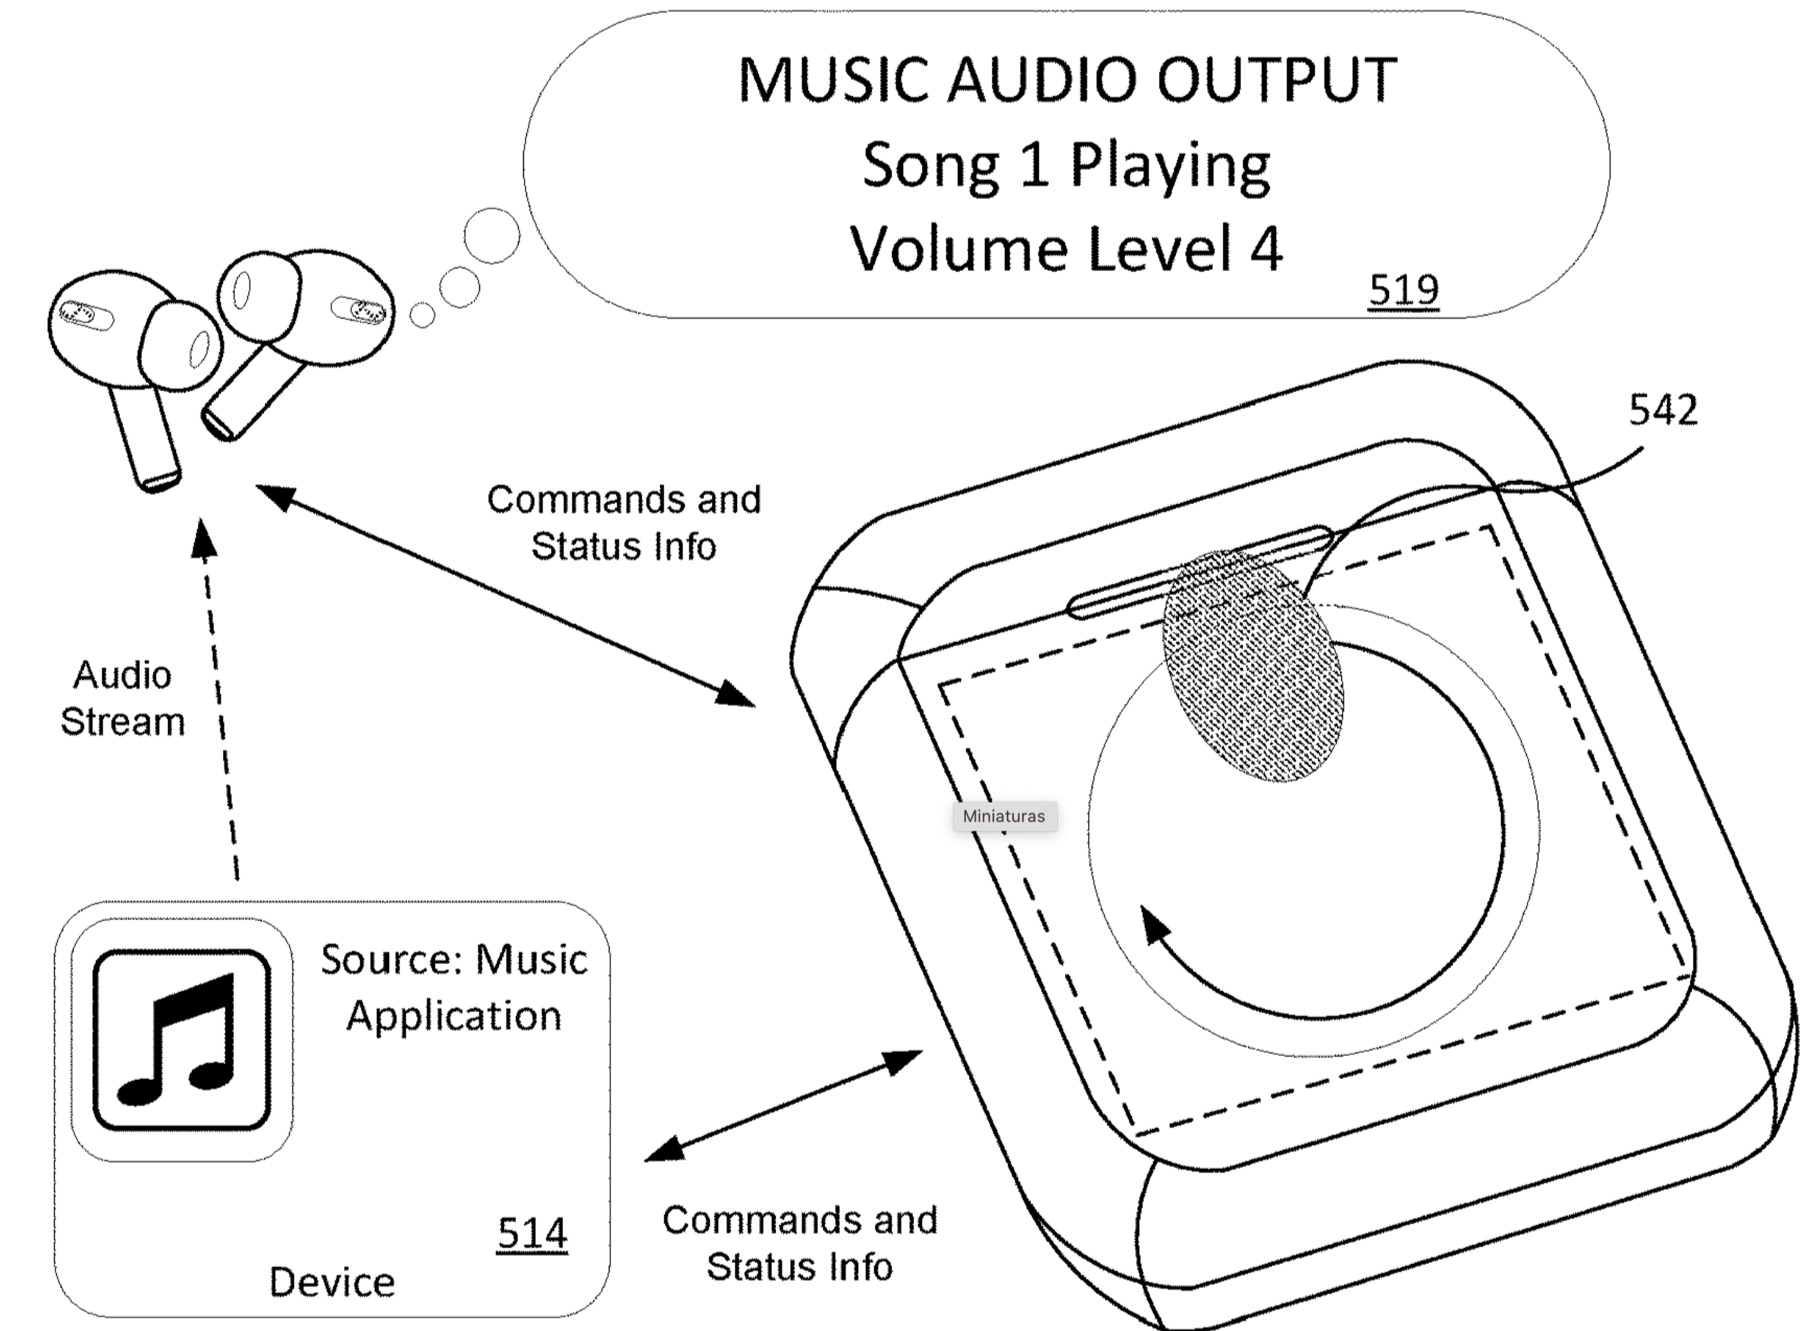 Patente de Apple mostrando una caja de carga de AirPods con pantalla táctil incorporada.